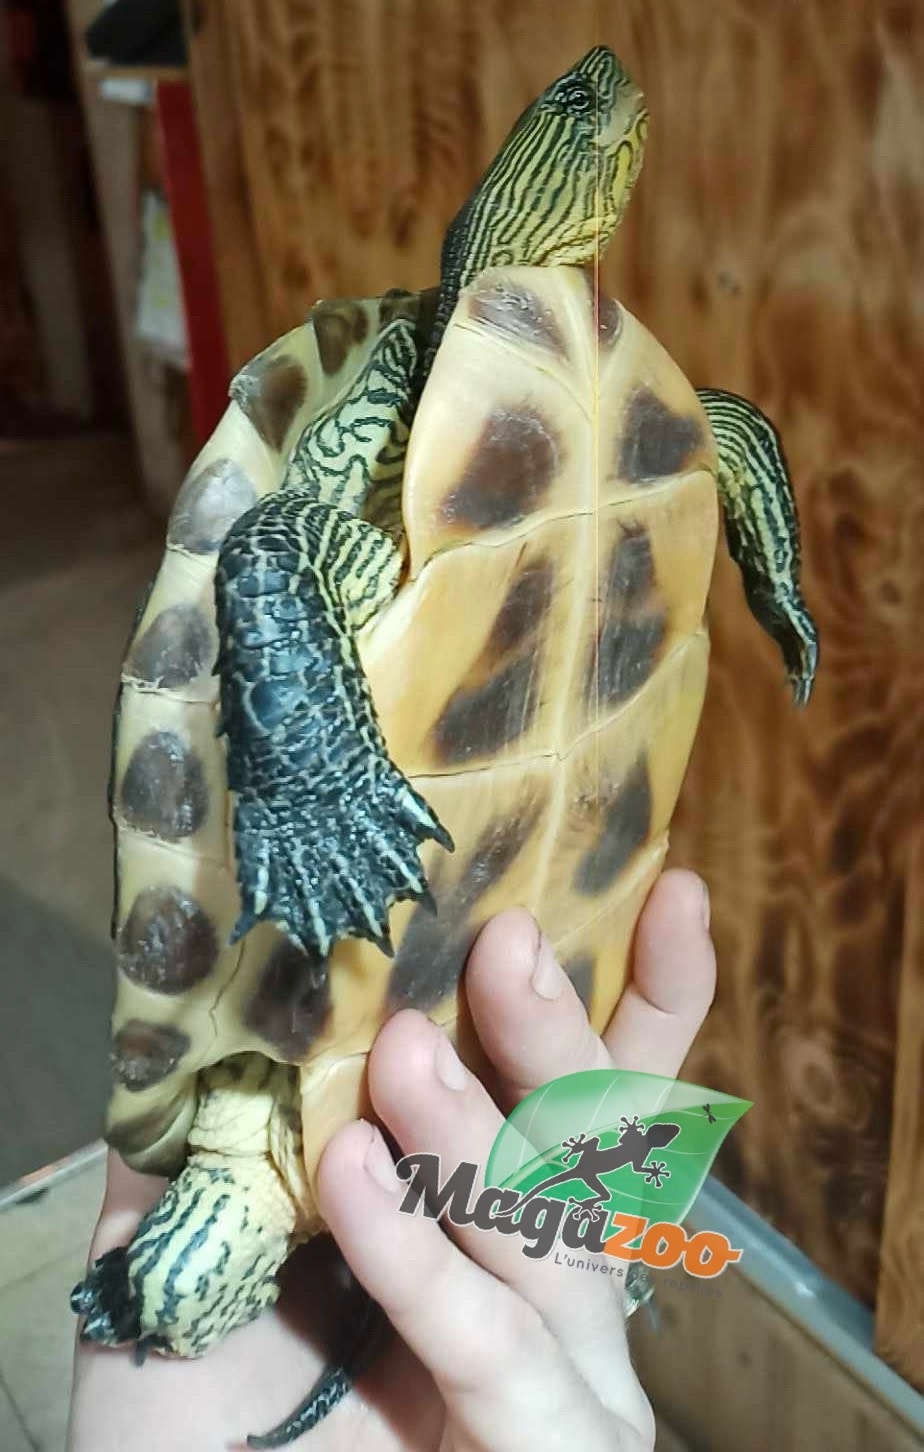 Magazoo Male Chinese striped neck turtle /Adoption - 2nd chance